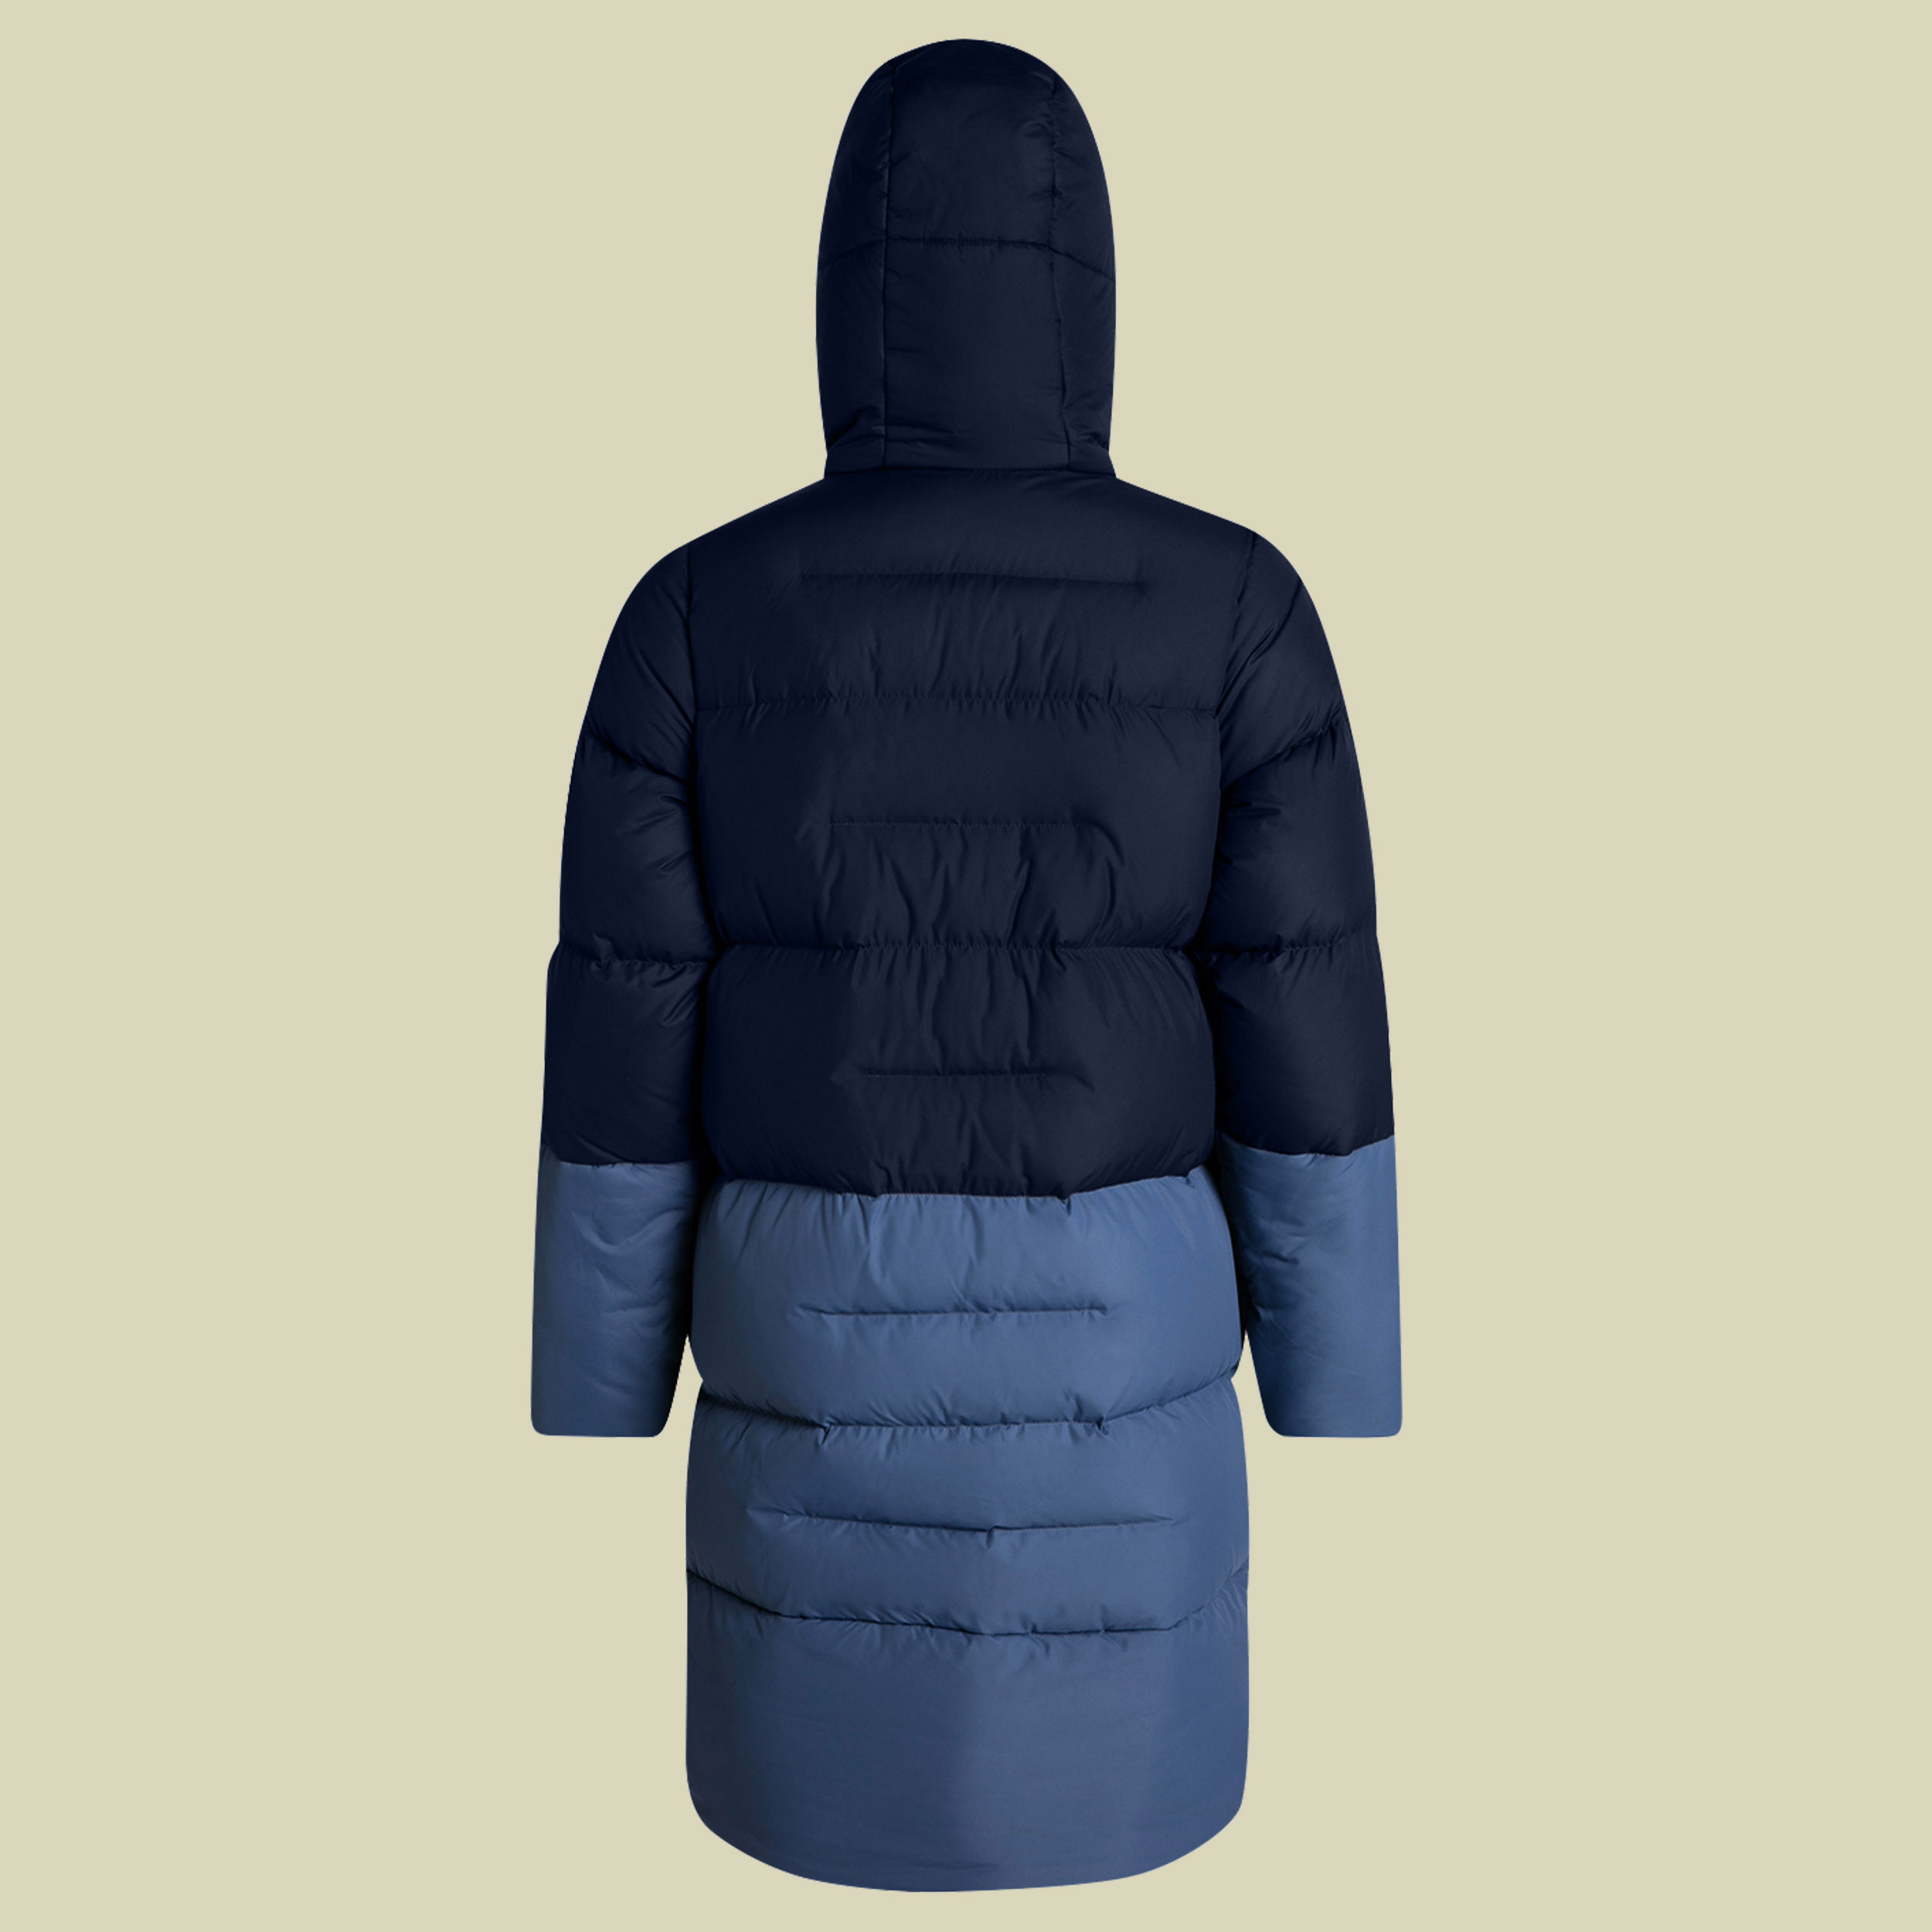 Combust Reflect Long Down Jacket Women Größe 42 (16) Farbe blue/dark blue